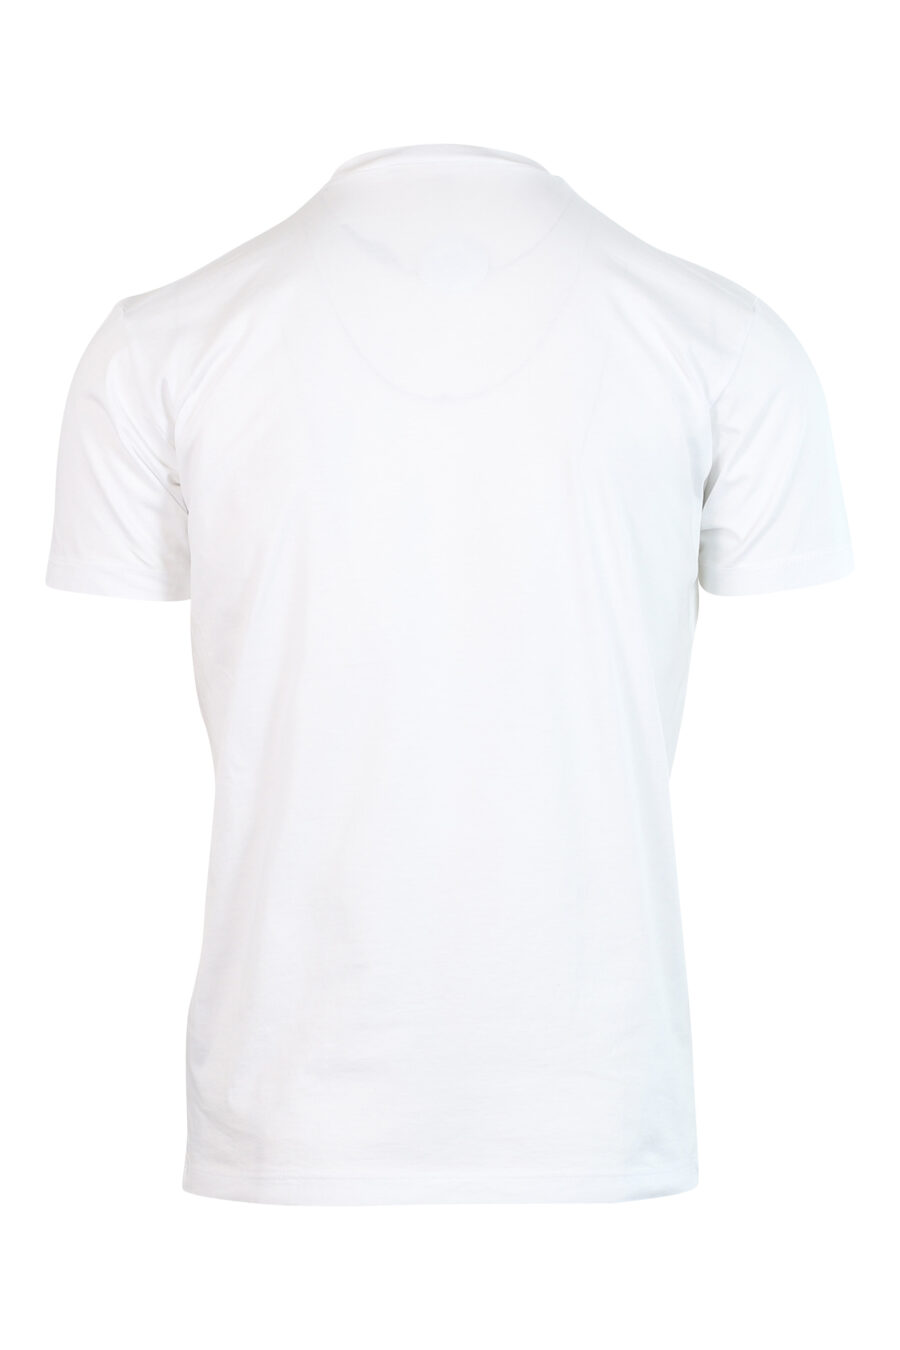 T-shirt branca com o logótipo "sweat and tears" - 8058049696083 2